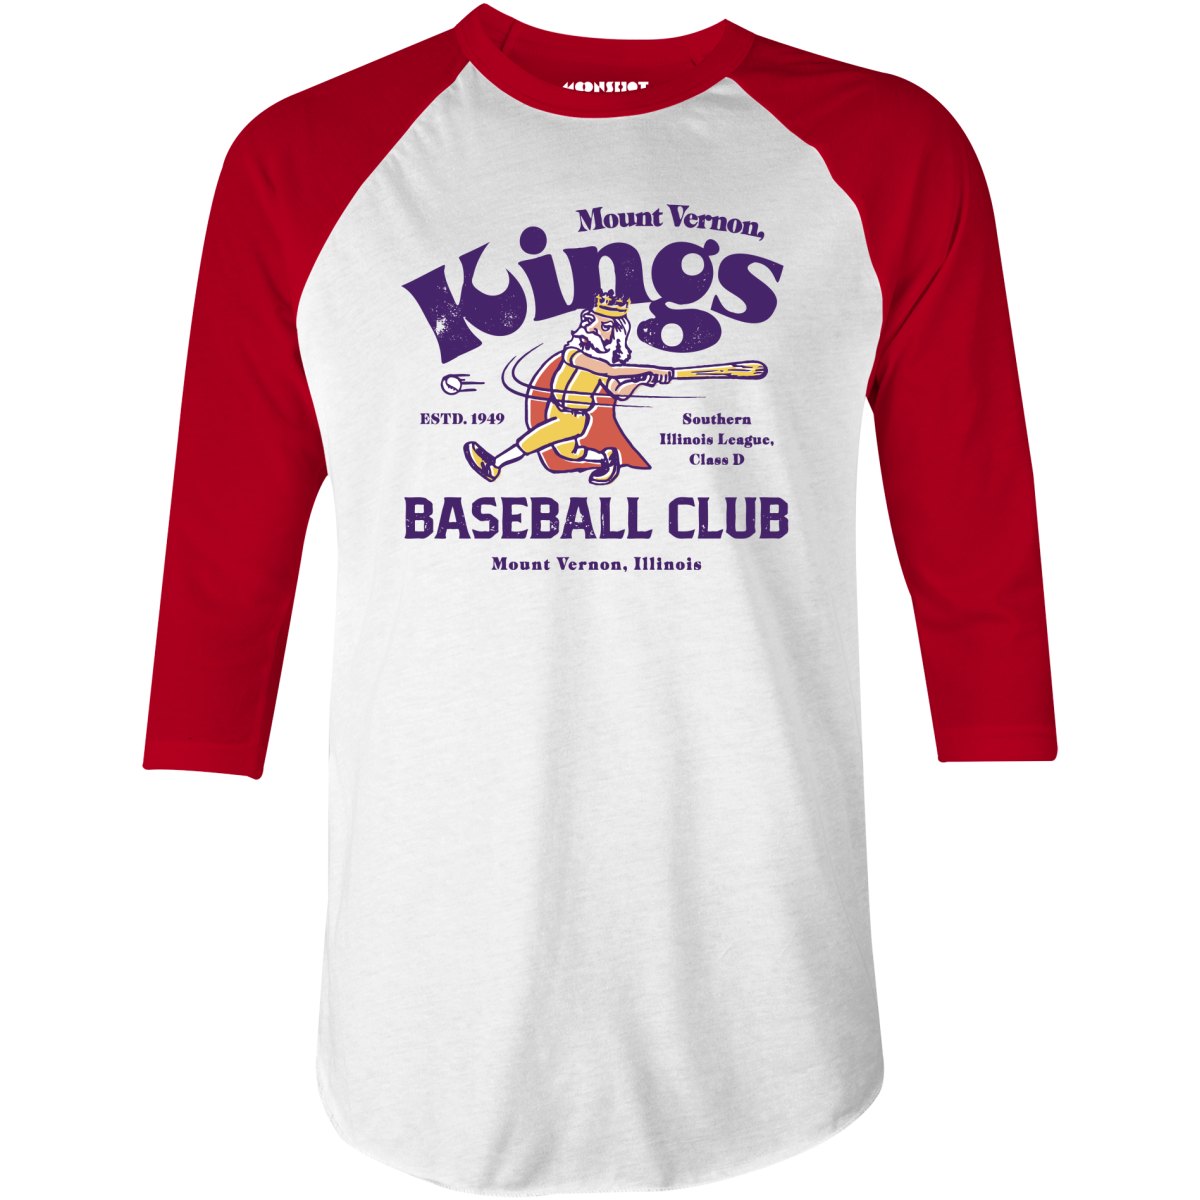 Mount Vernon Kings - Illinois - Vintage Defunct Baseball Teams - 3/4 Sleeve Raglan T-Shirt